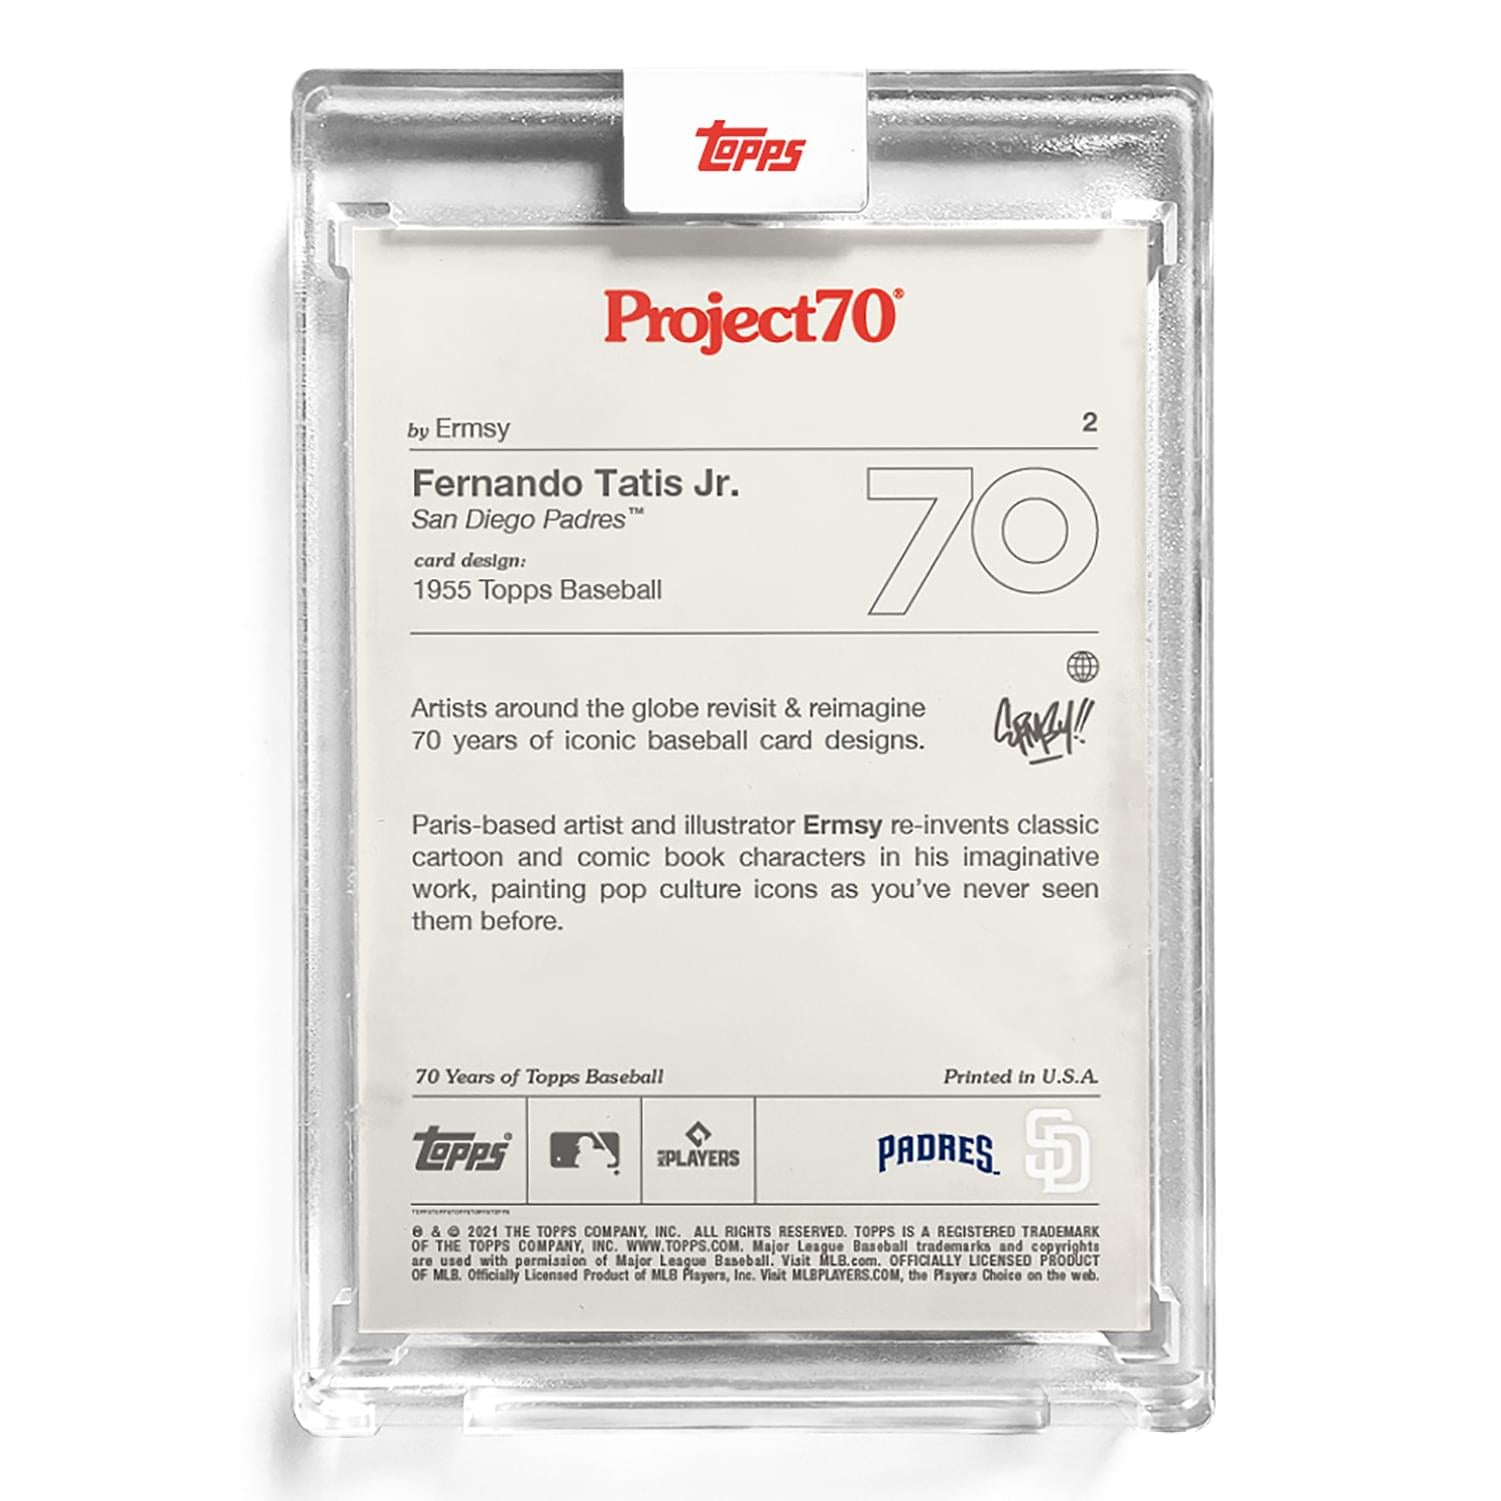 Topps Project70 Card 2 - 1955 Fernando Tatis Jr. by Ermsy